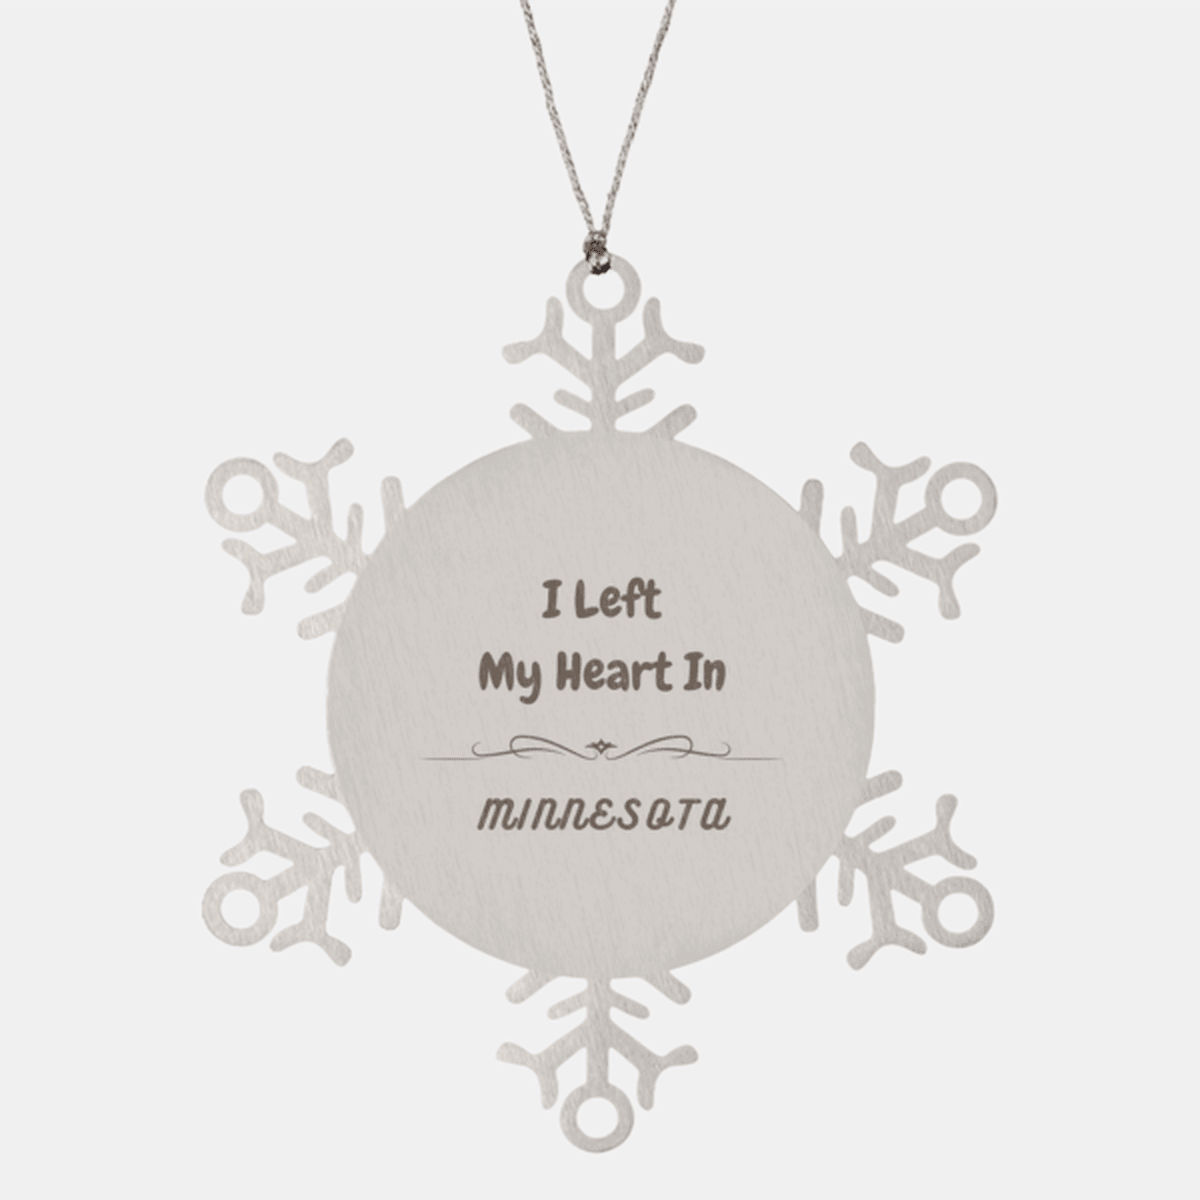 I Left My Heart In Minnesota Gifts, Meaningful Minnesota State for Friends, Men, Women. Snowflake Ornament for Minnesota People - Mallard Moon Gift Shop